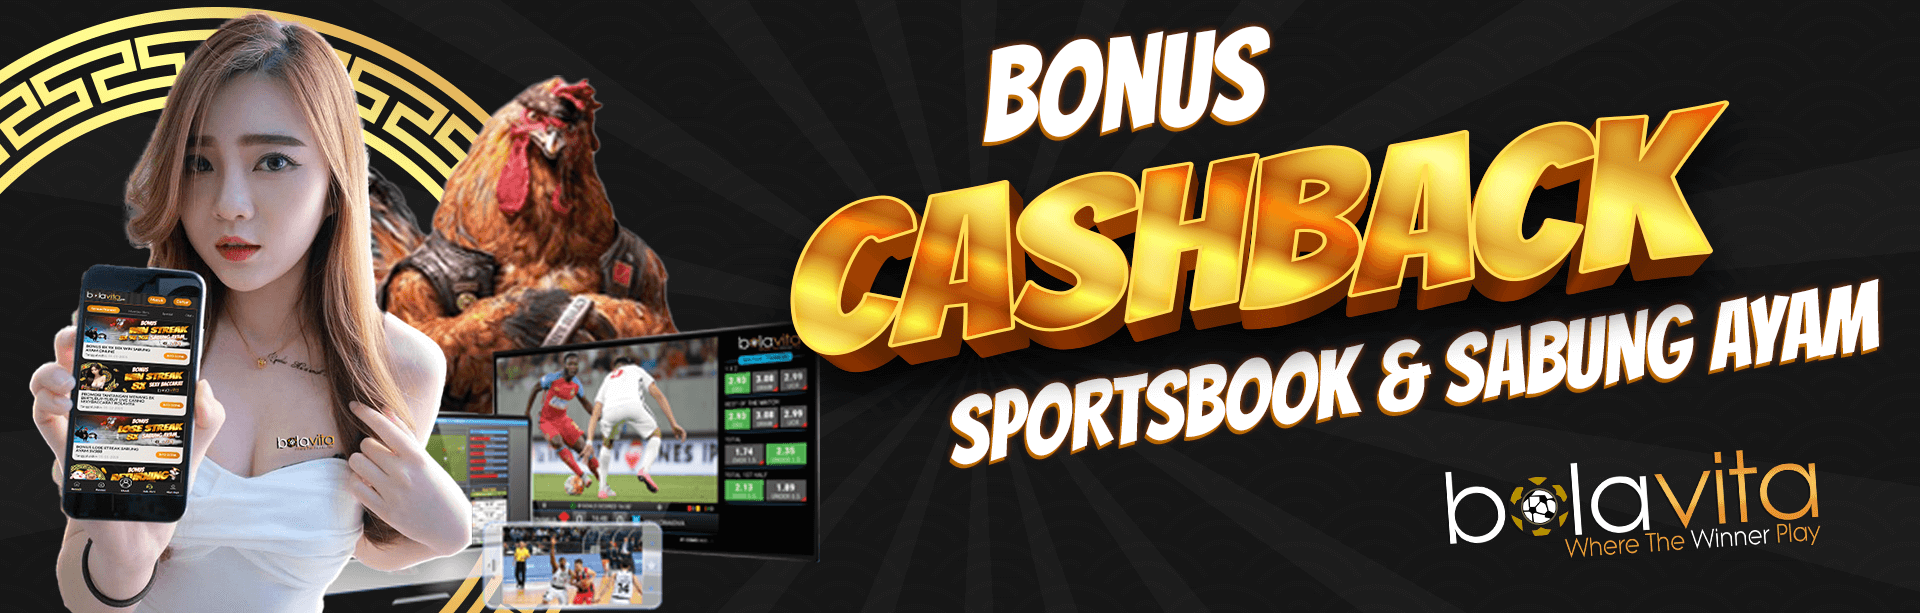 Bonus Cashback Sportsbook & Sabung Ayam 5-10%